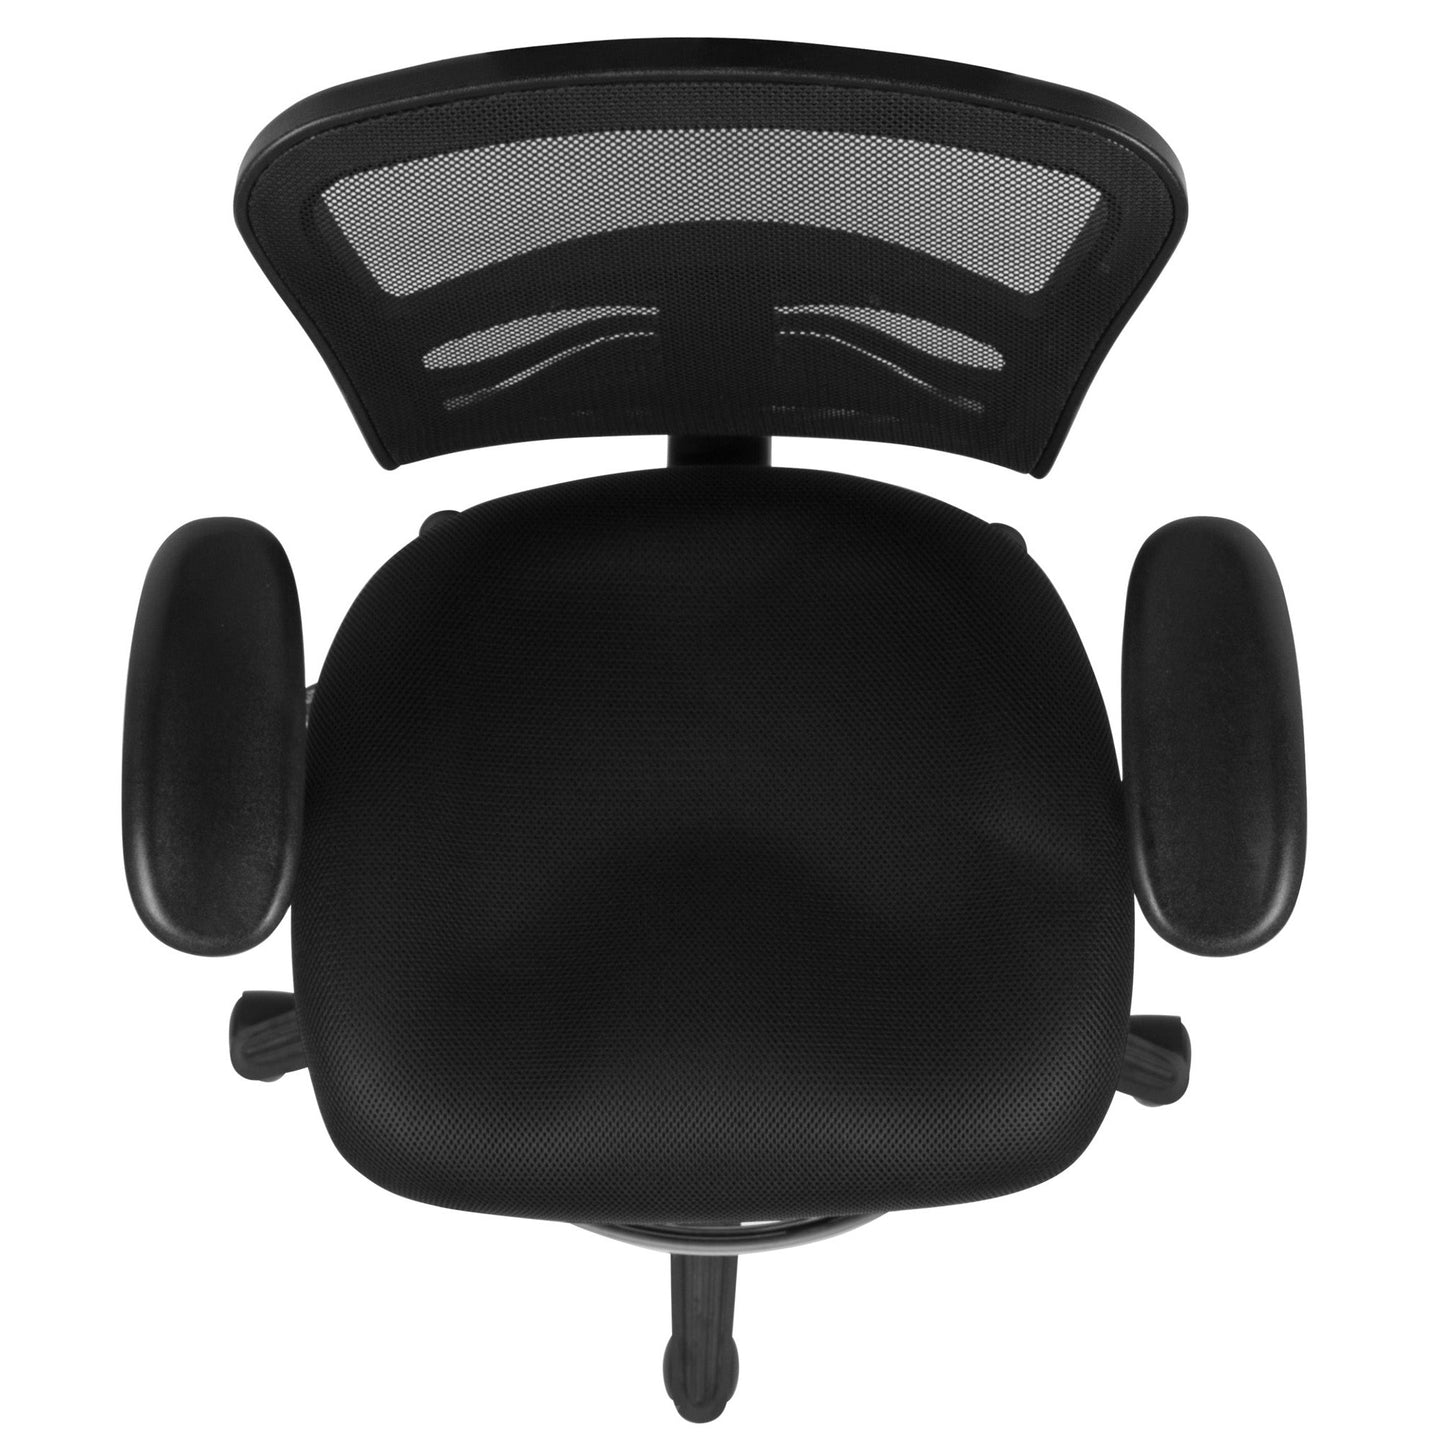 Mid-Back Black Mesh Ergonomic Drafting Chair - home • office • health